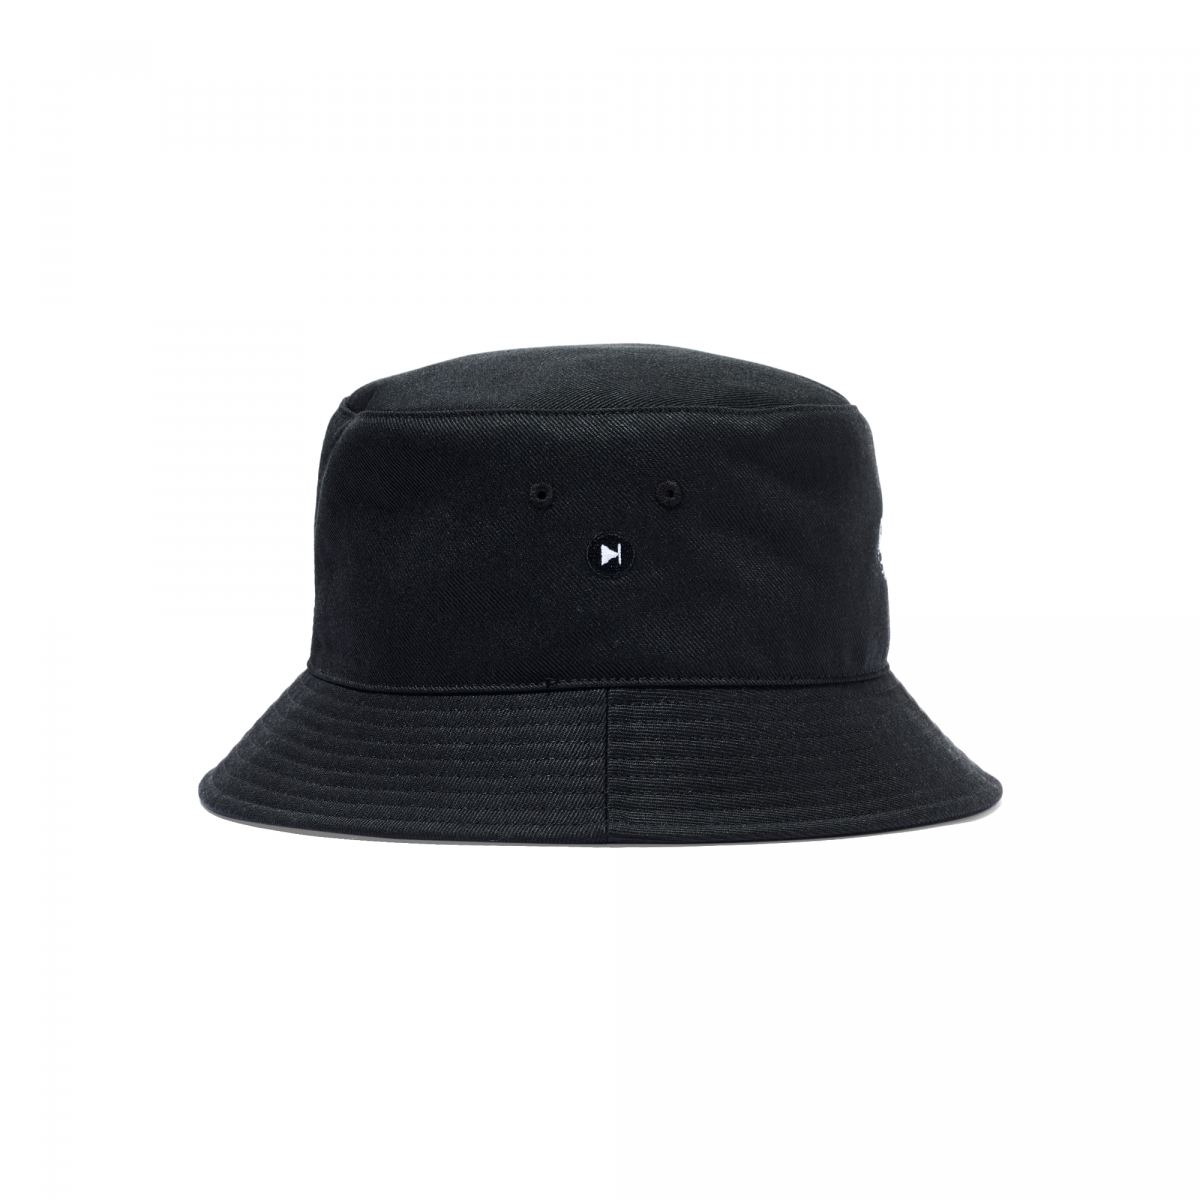 SEQUEL BUCKET HAT BLACK 61％以上節約 - 帽子